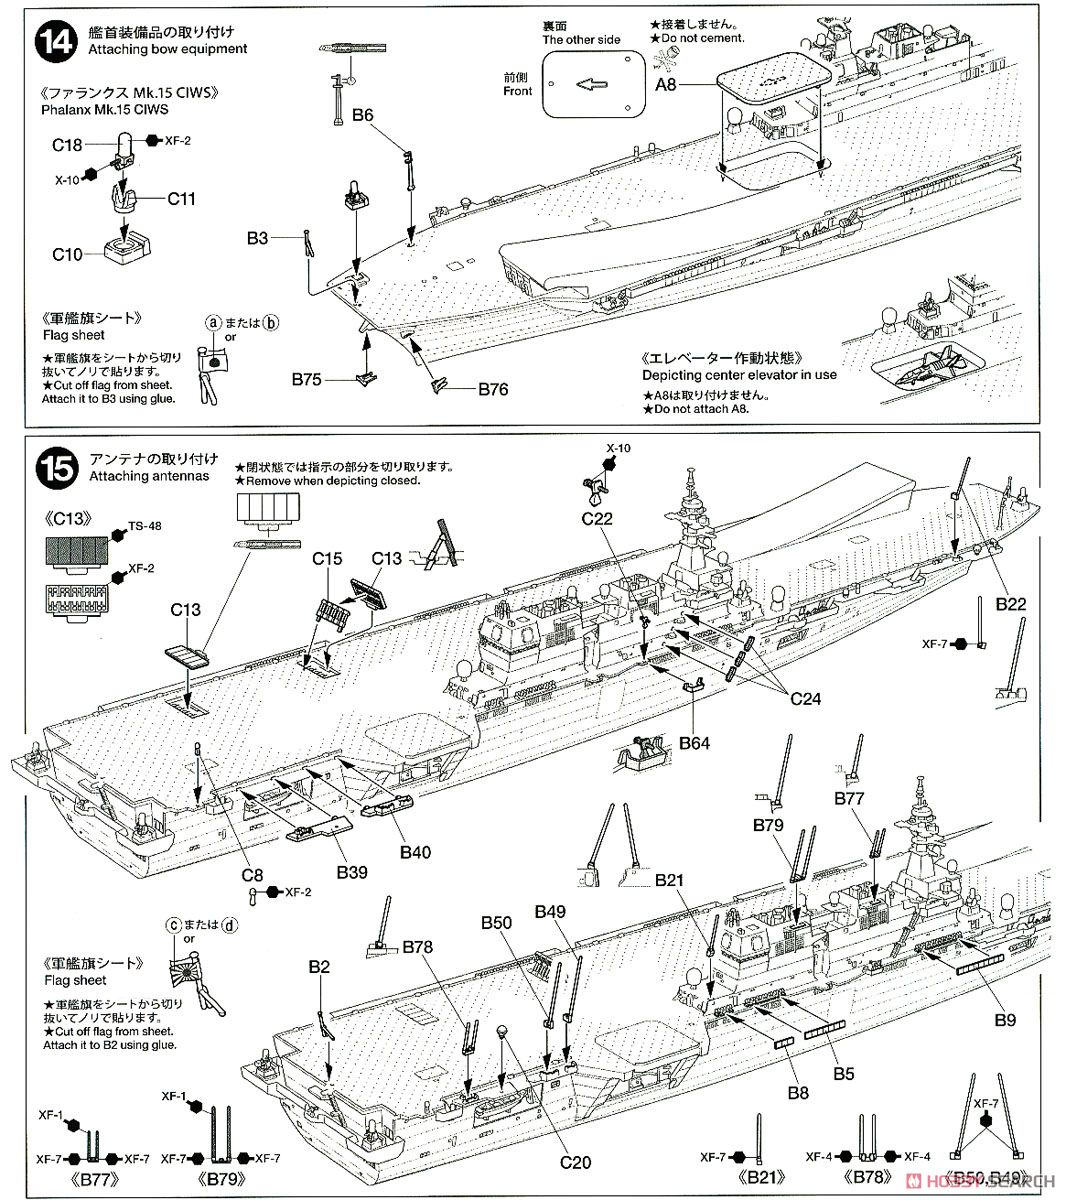 DDV192 空母いぶき (プラモデル) 設計図6